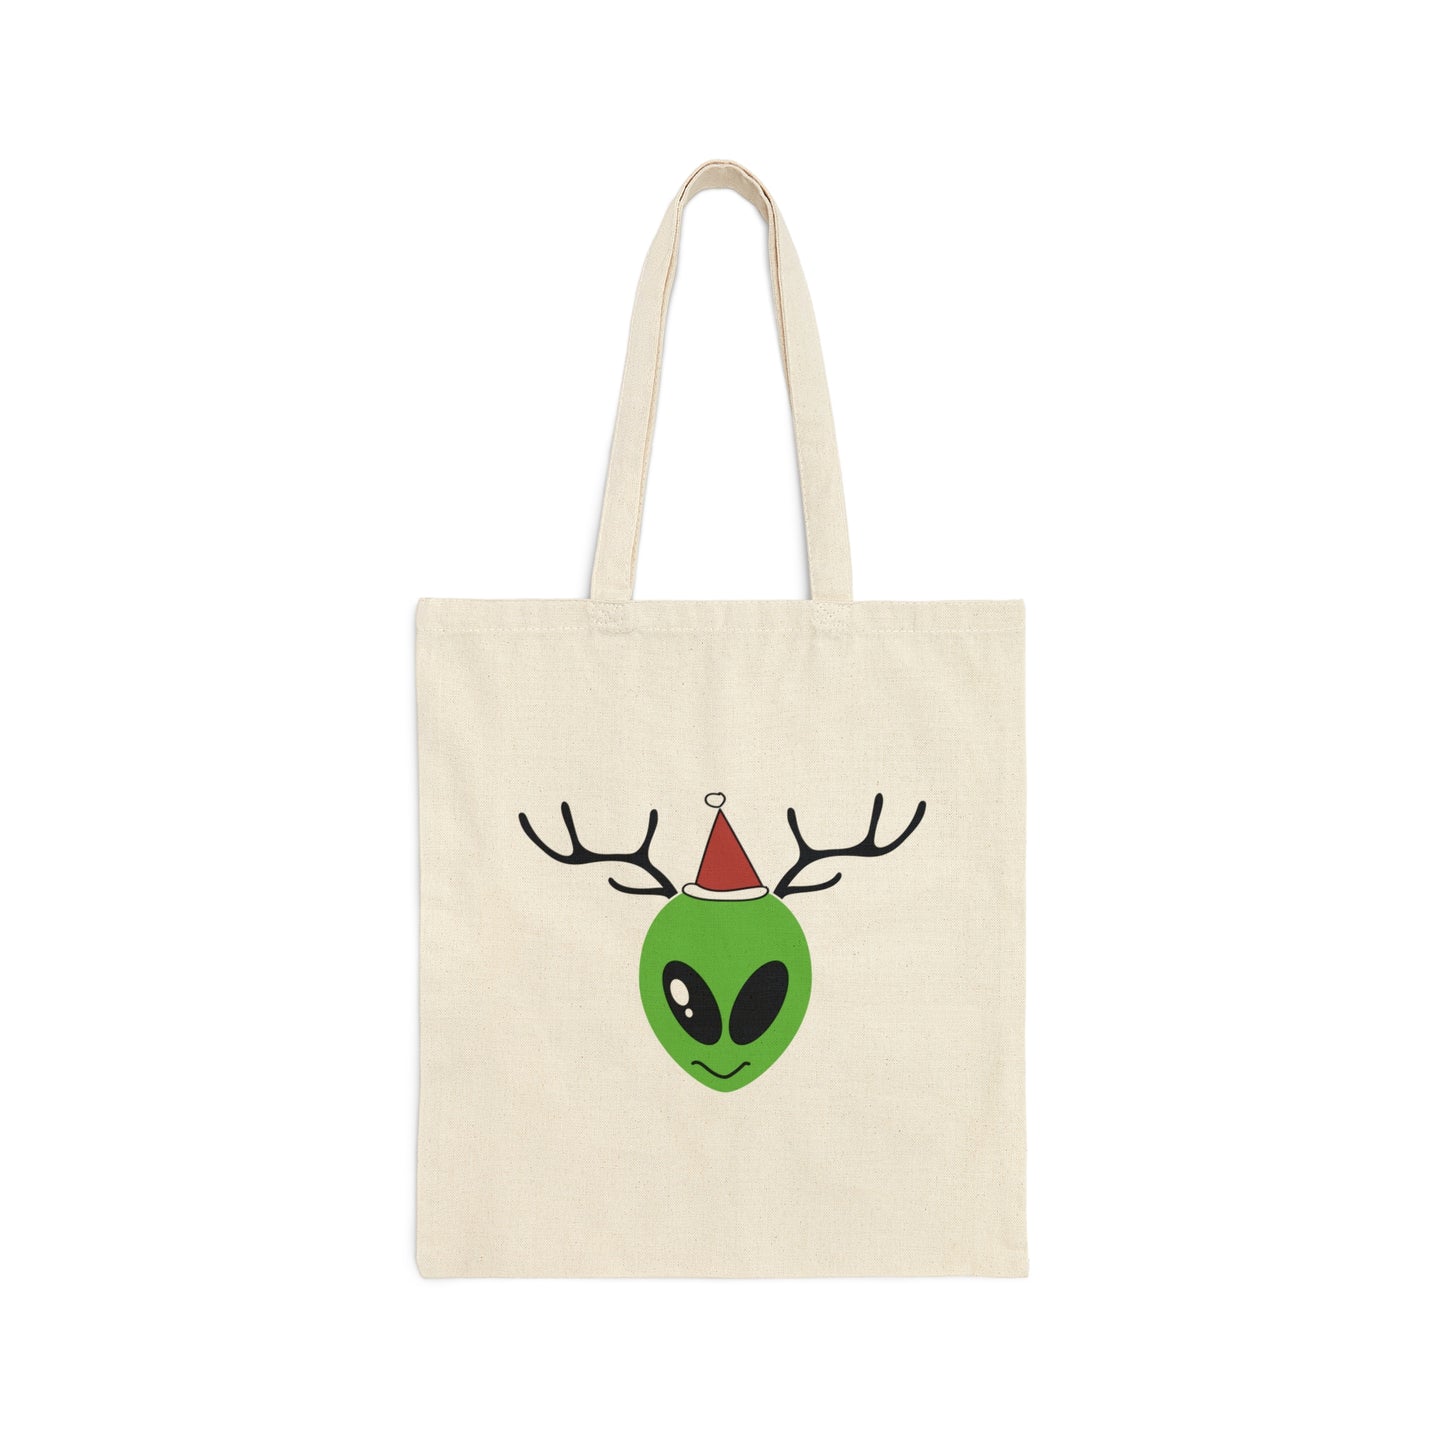 Xmas Aliens Deer Santa Claus UFOS Canvas Shopping Cotton Tote Bag